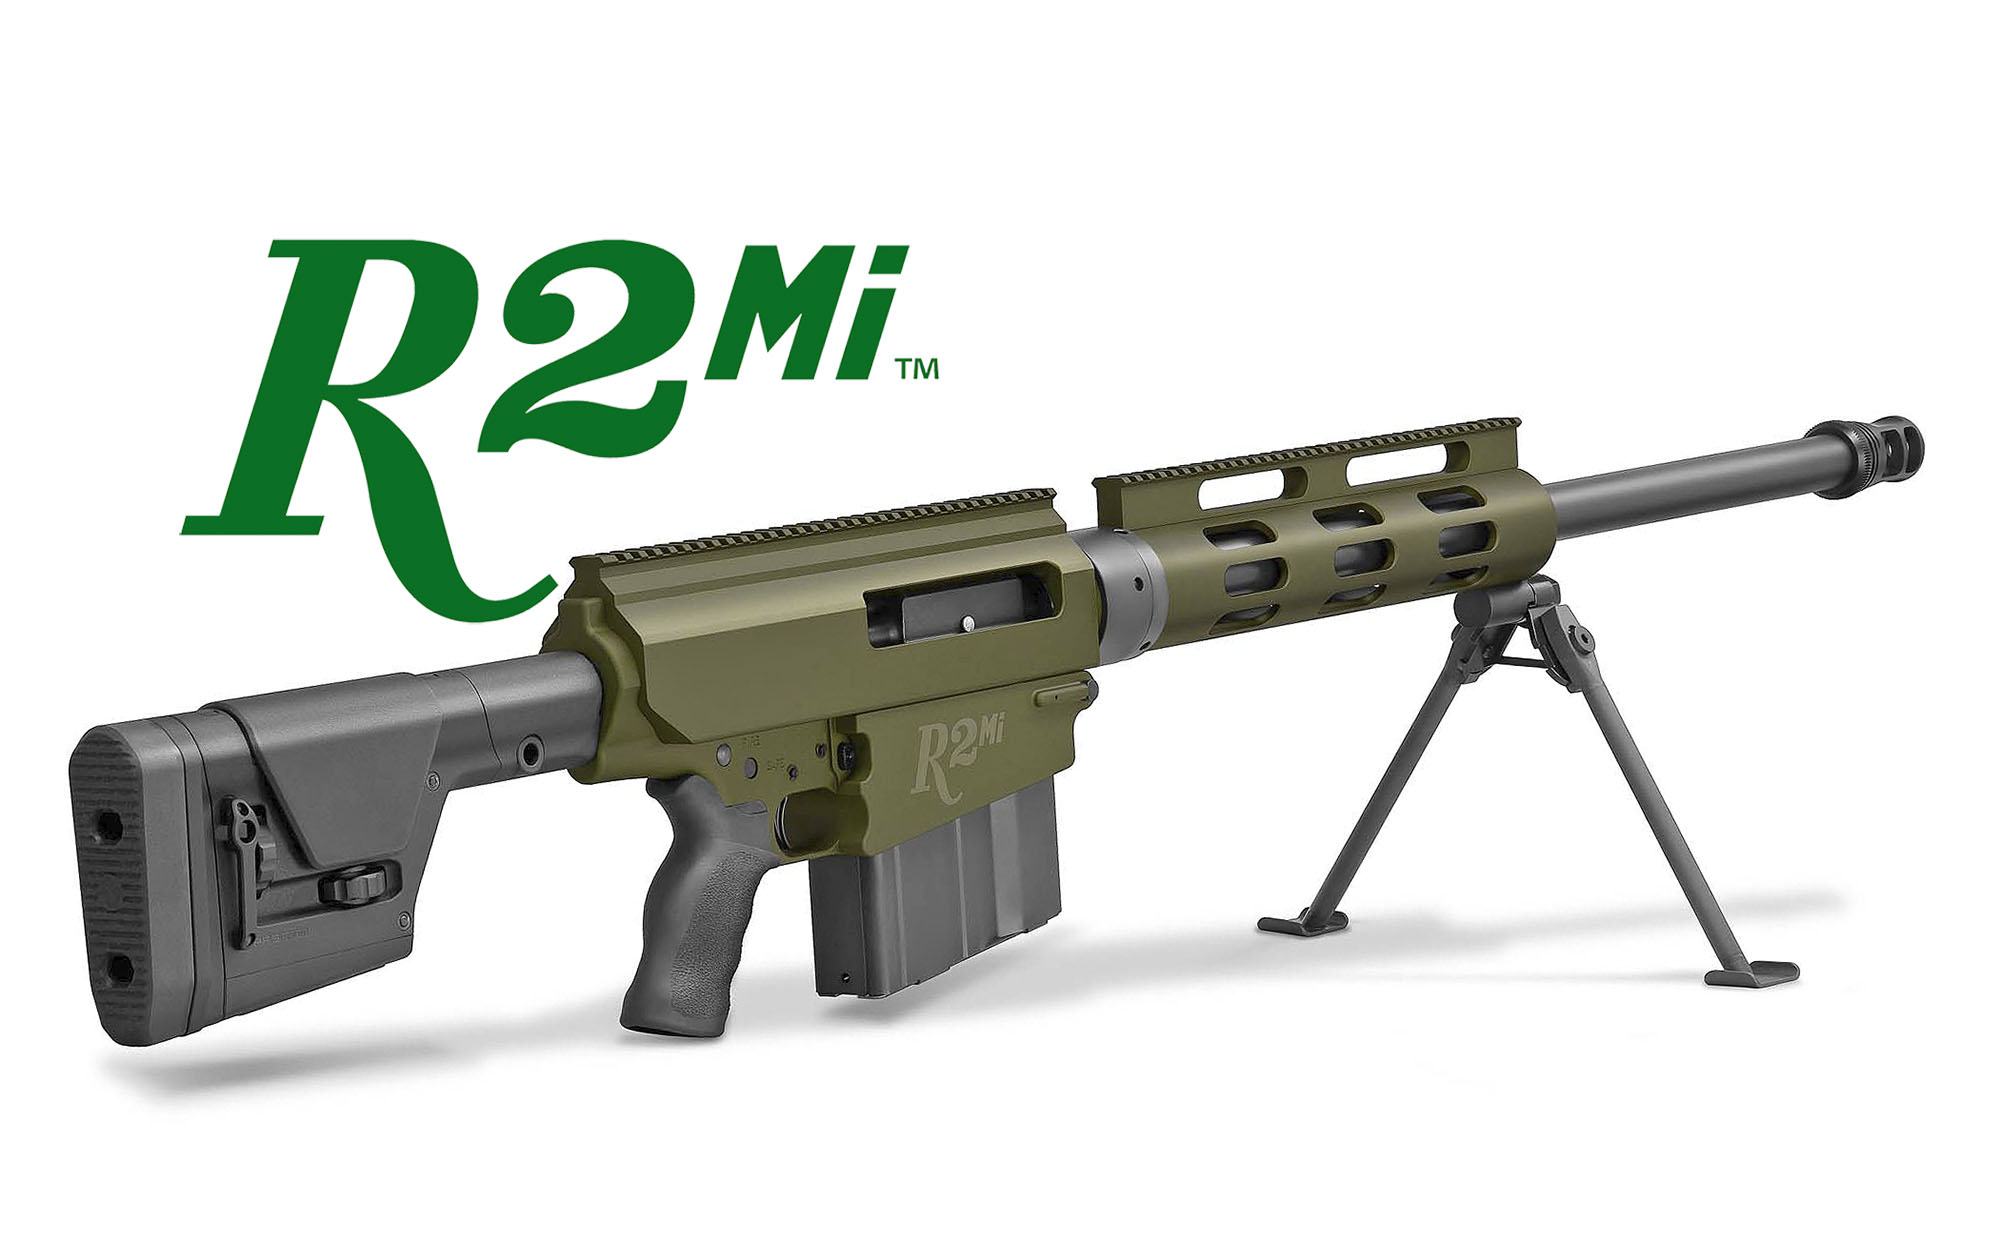 Remington R2mi 50 Caliber Rifle The Big Green Goes Full Extended Long Range Gunsweek Com